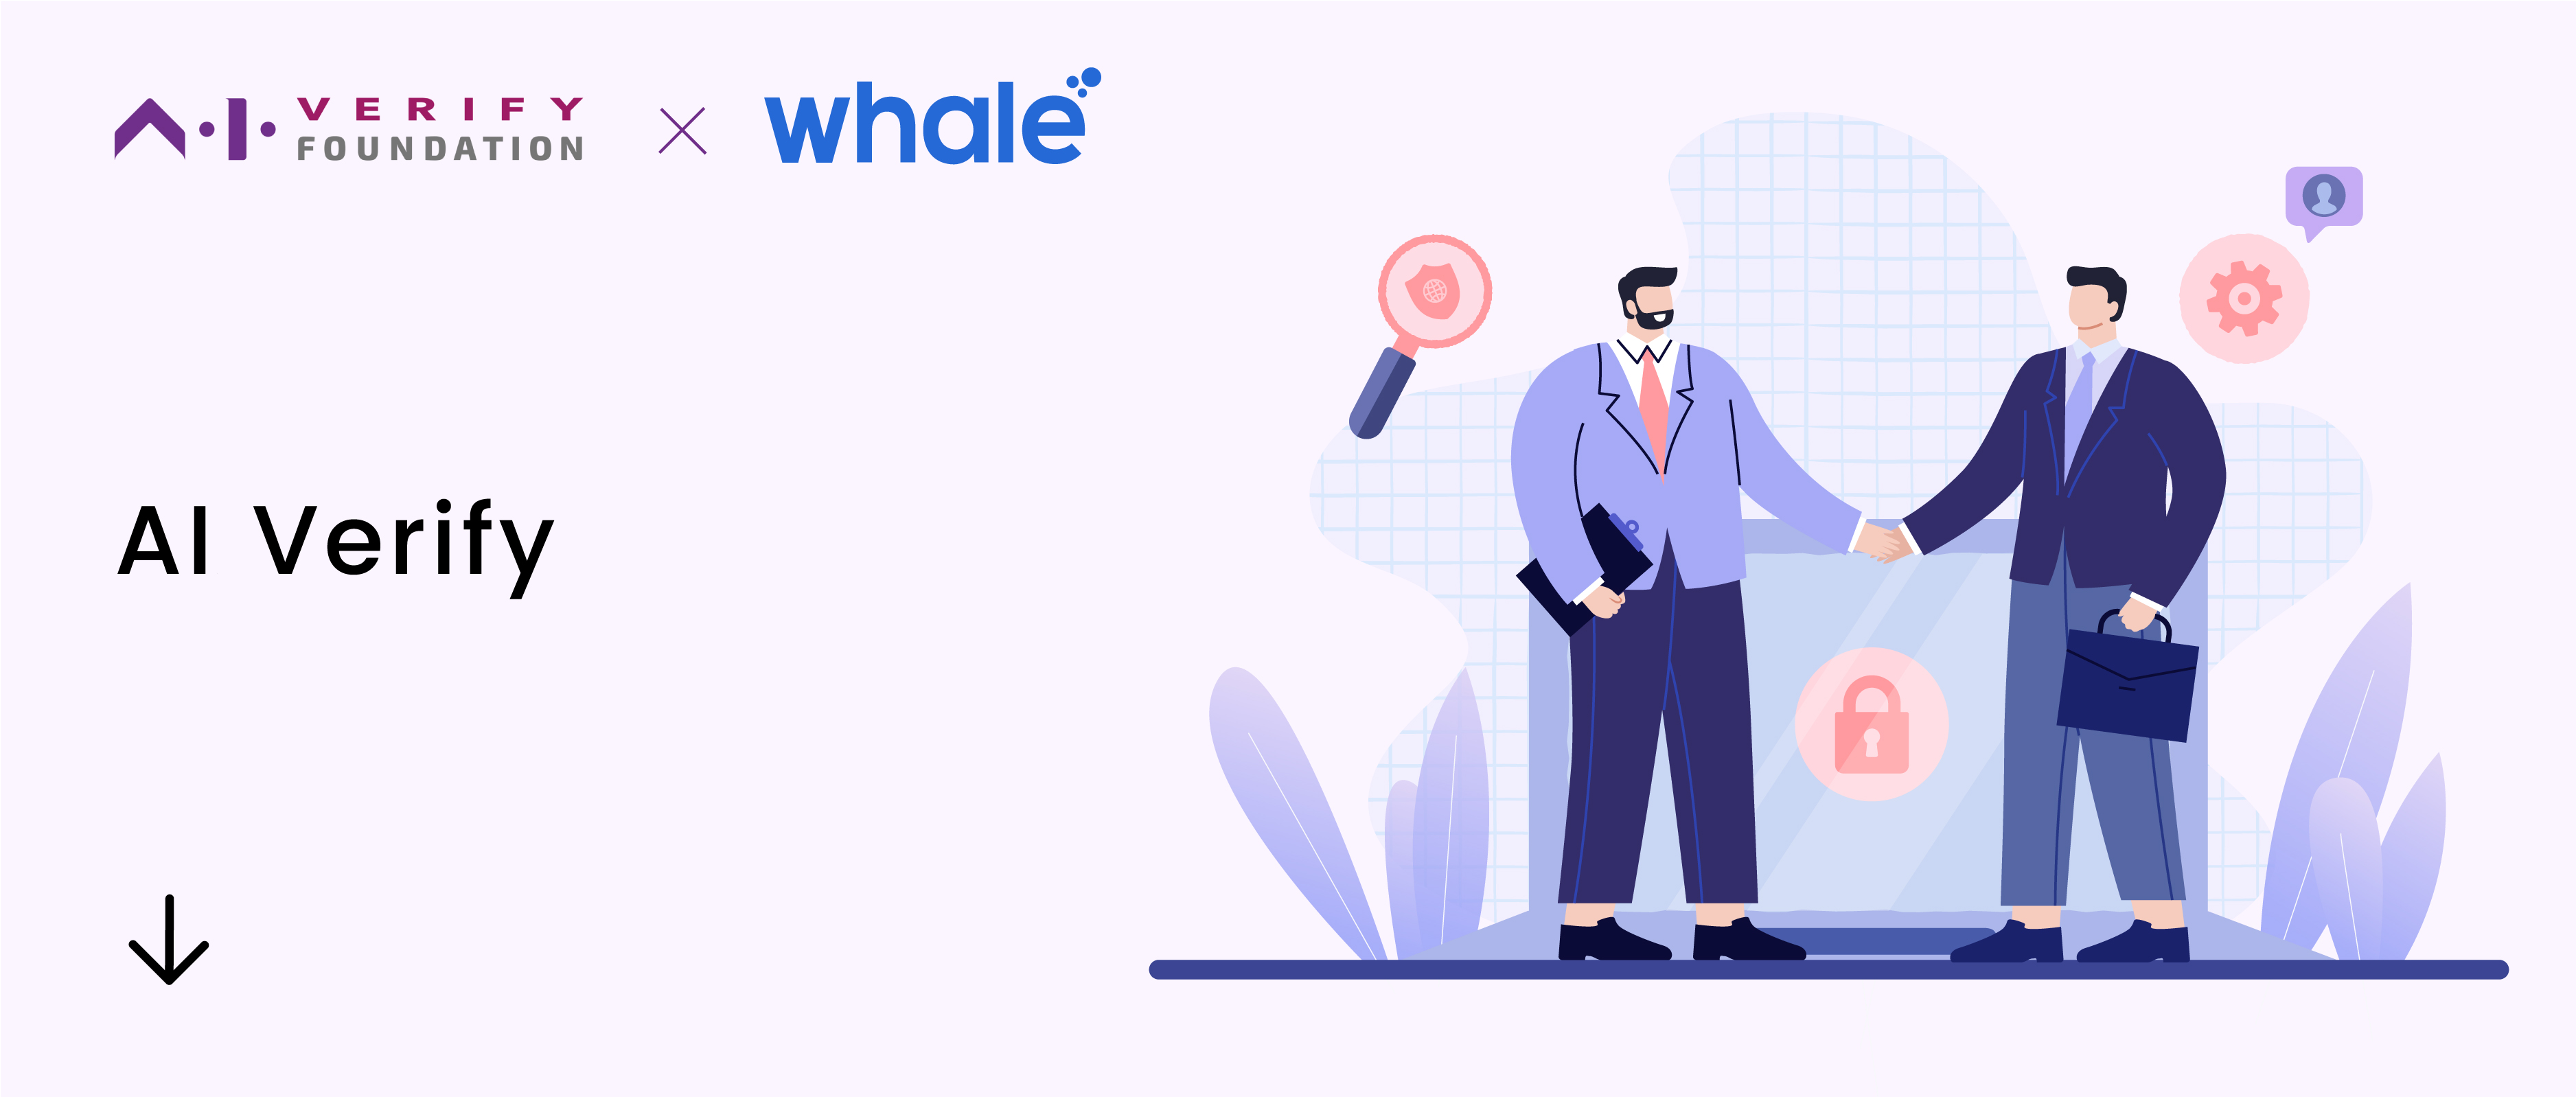 Whale 帷幄加入「AI Verify 基金会」，共创安全可信的 AI 未来